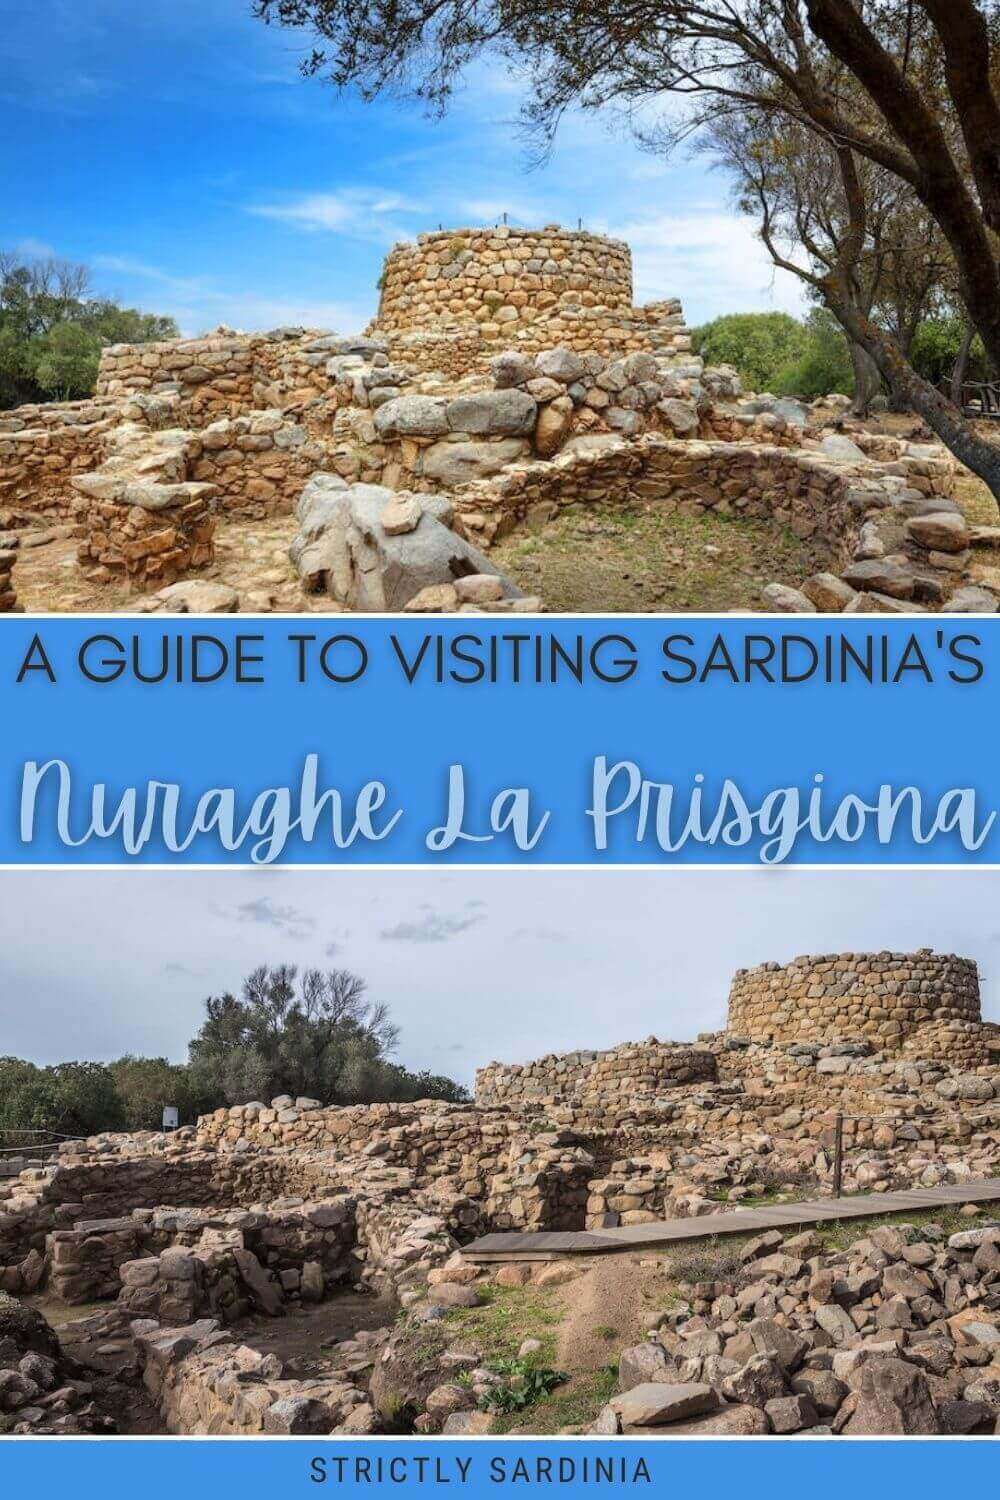 Read what you must know about Nuraghe La Prisgiona, Sardinia - via @c_tavani